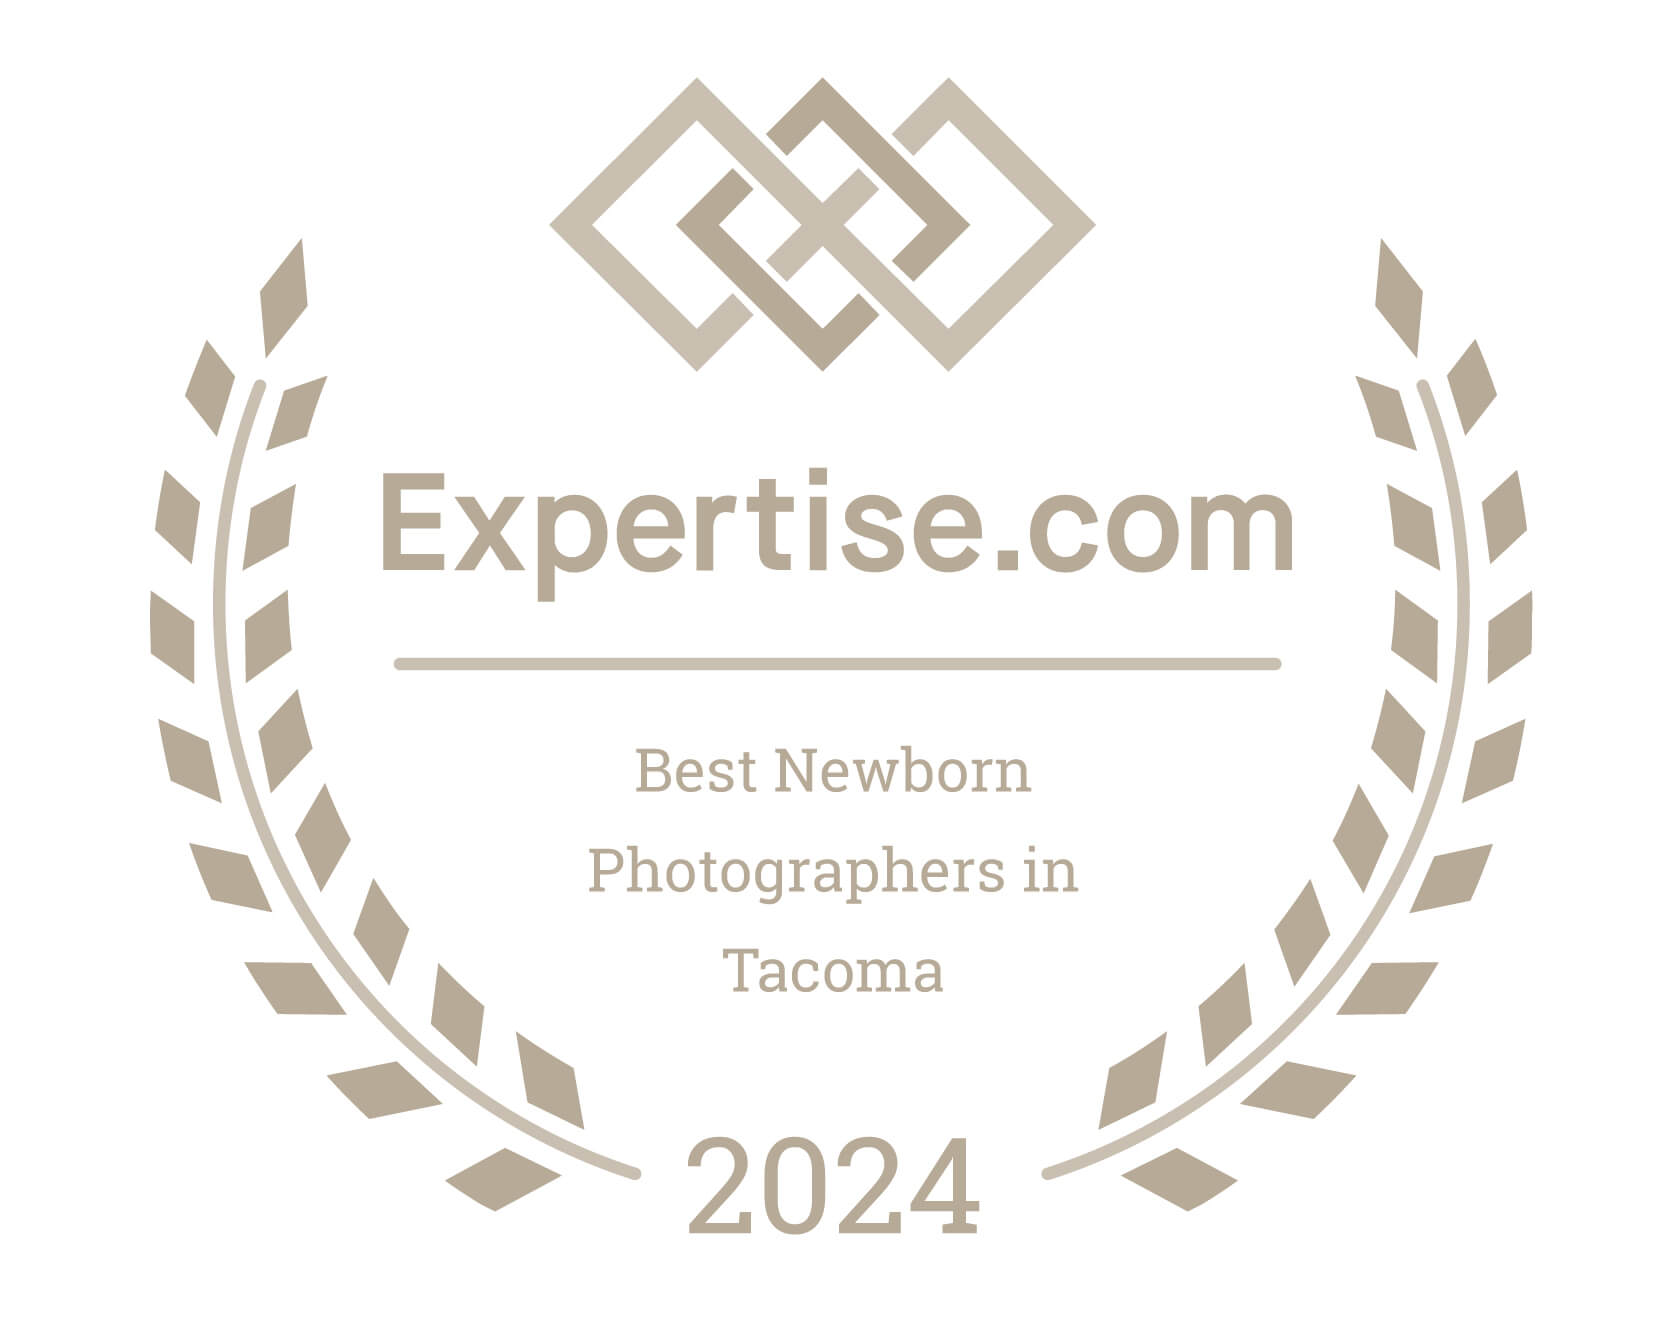 best newborn photographer in tacoma 2024